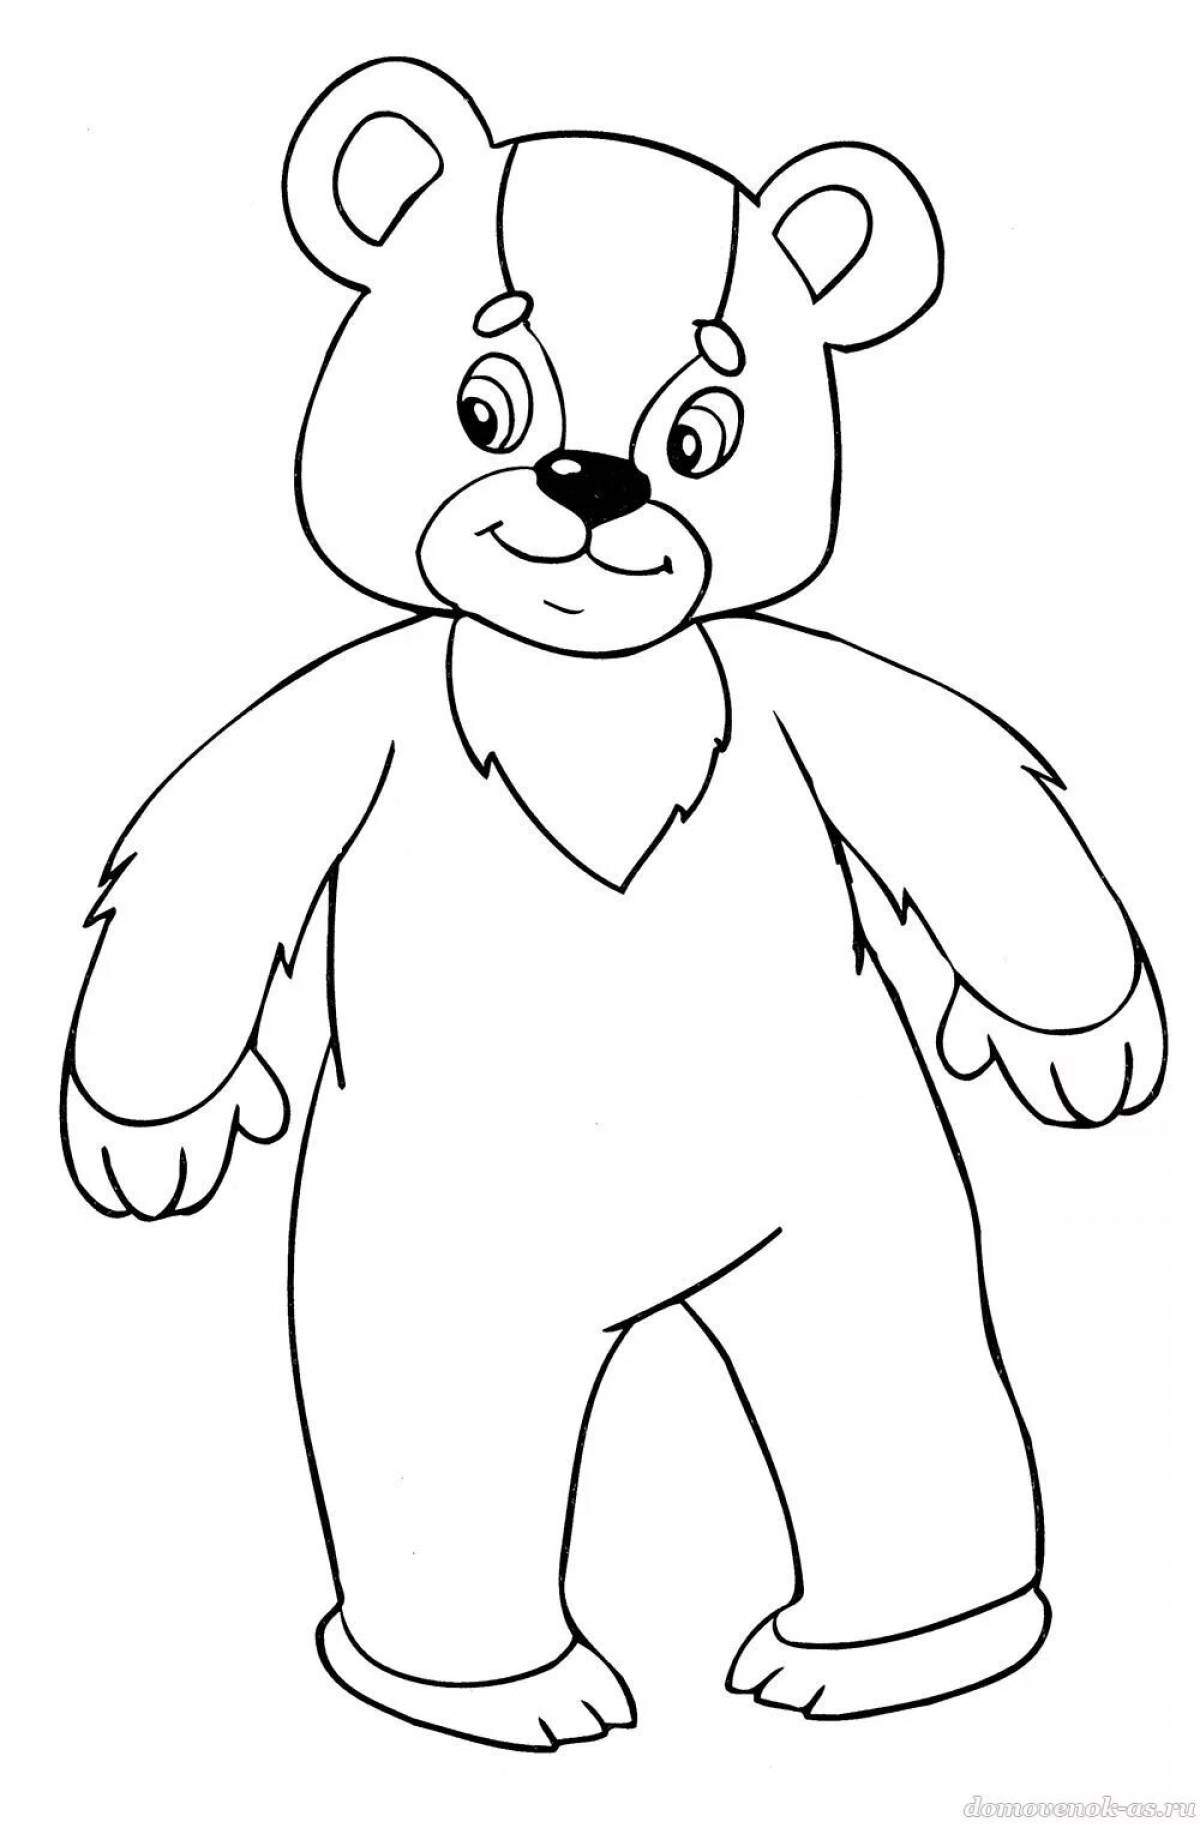 Fancy bear-teremok coloring book